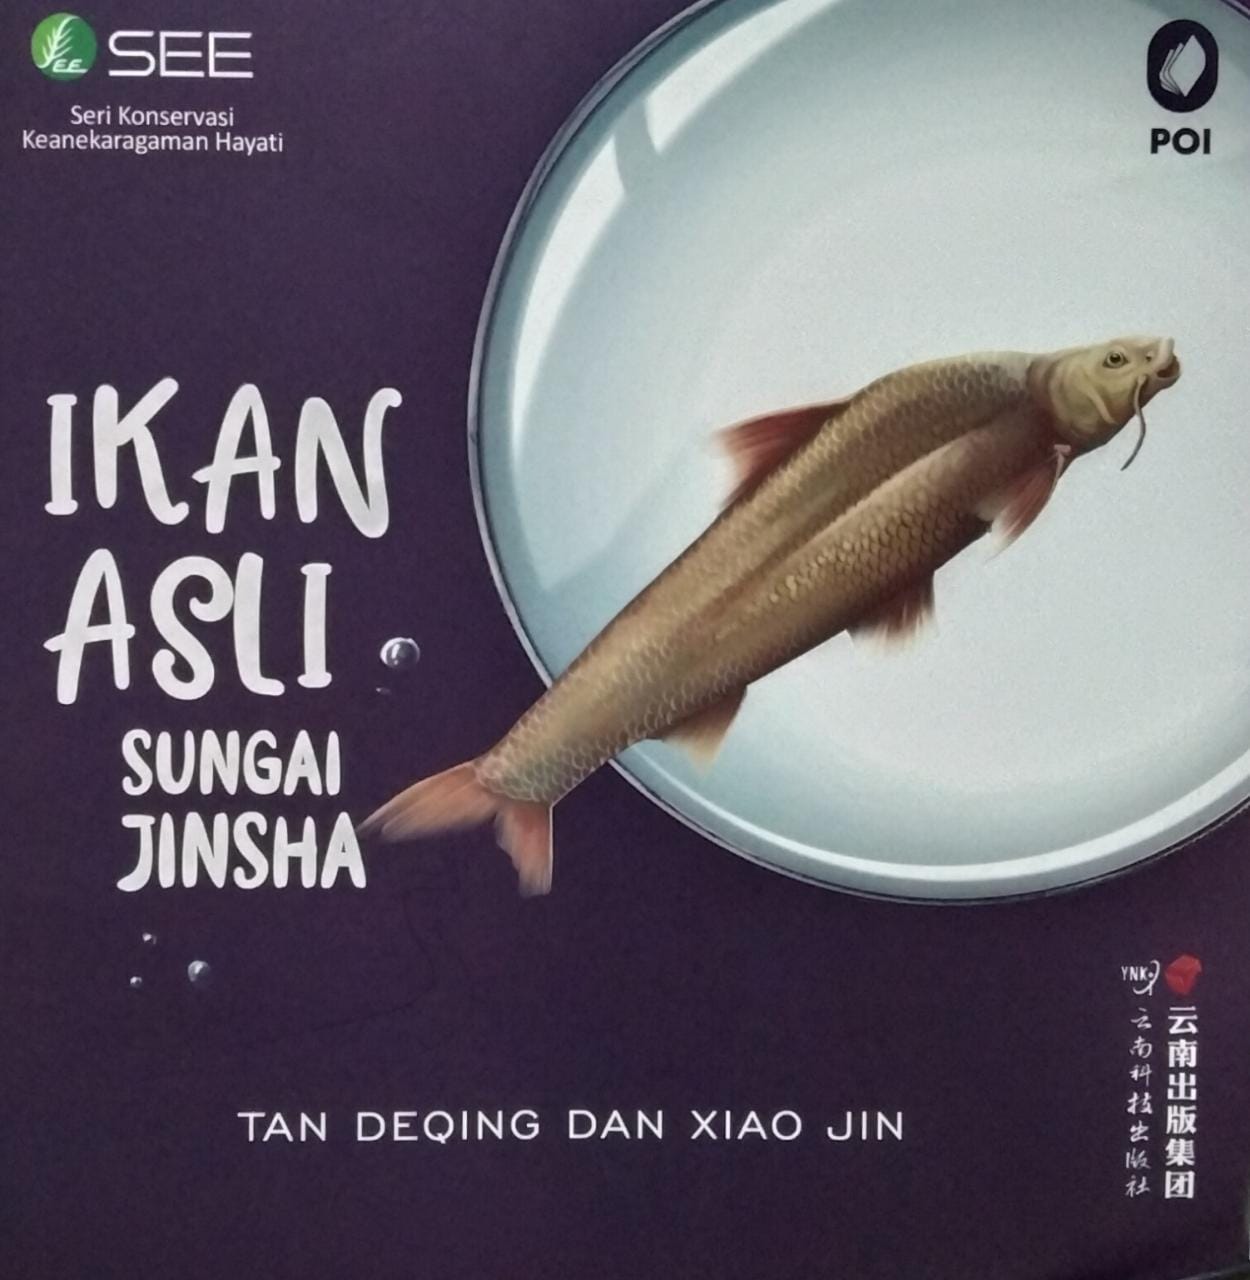 Ikan asin sungai jinsha